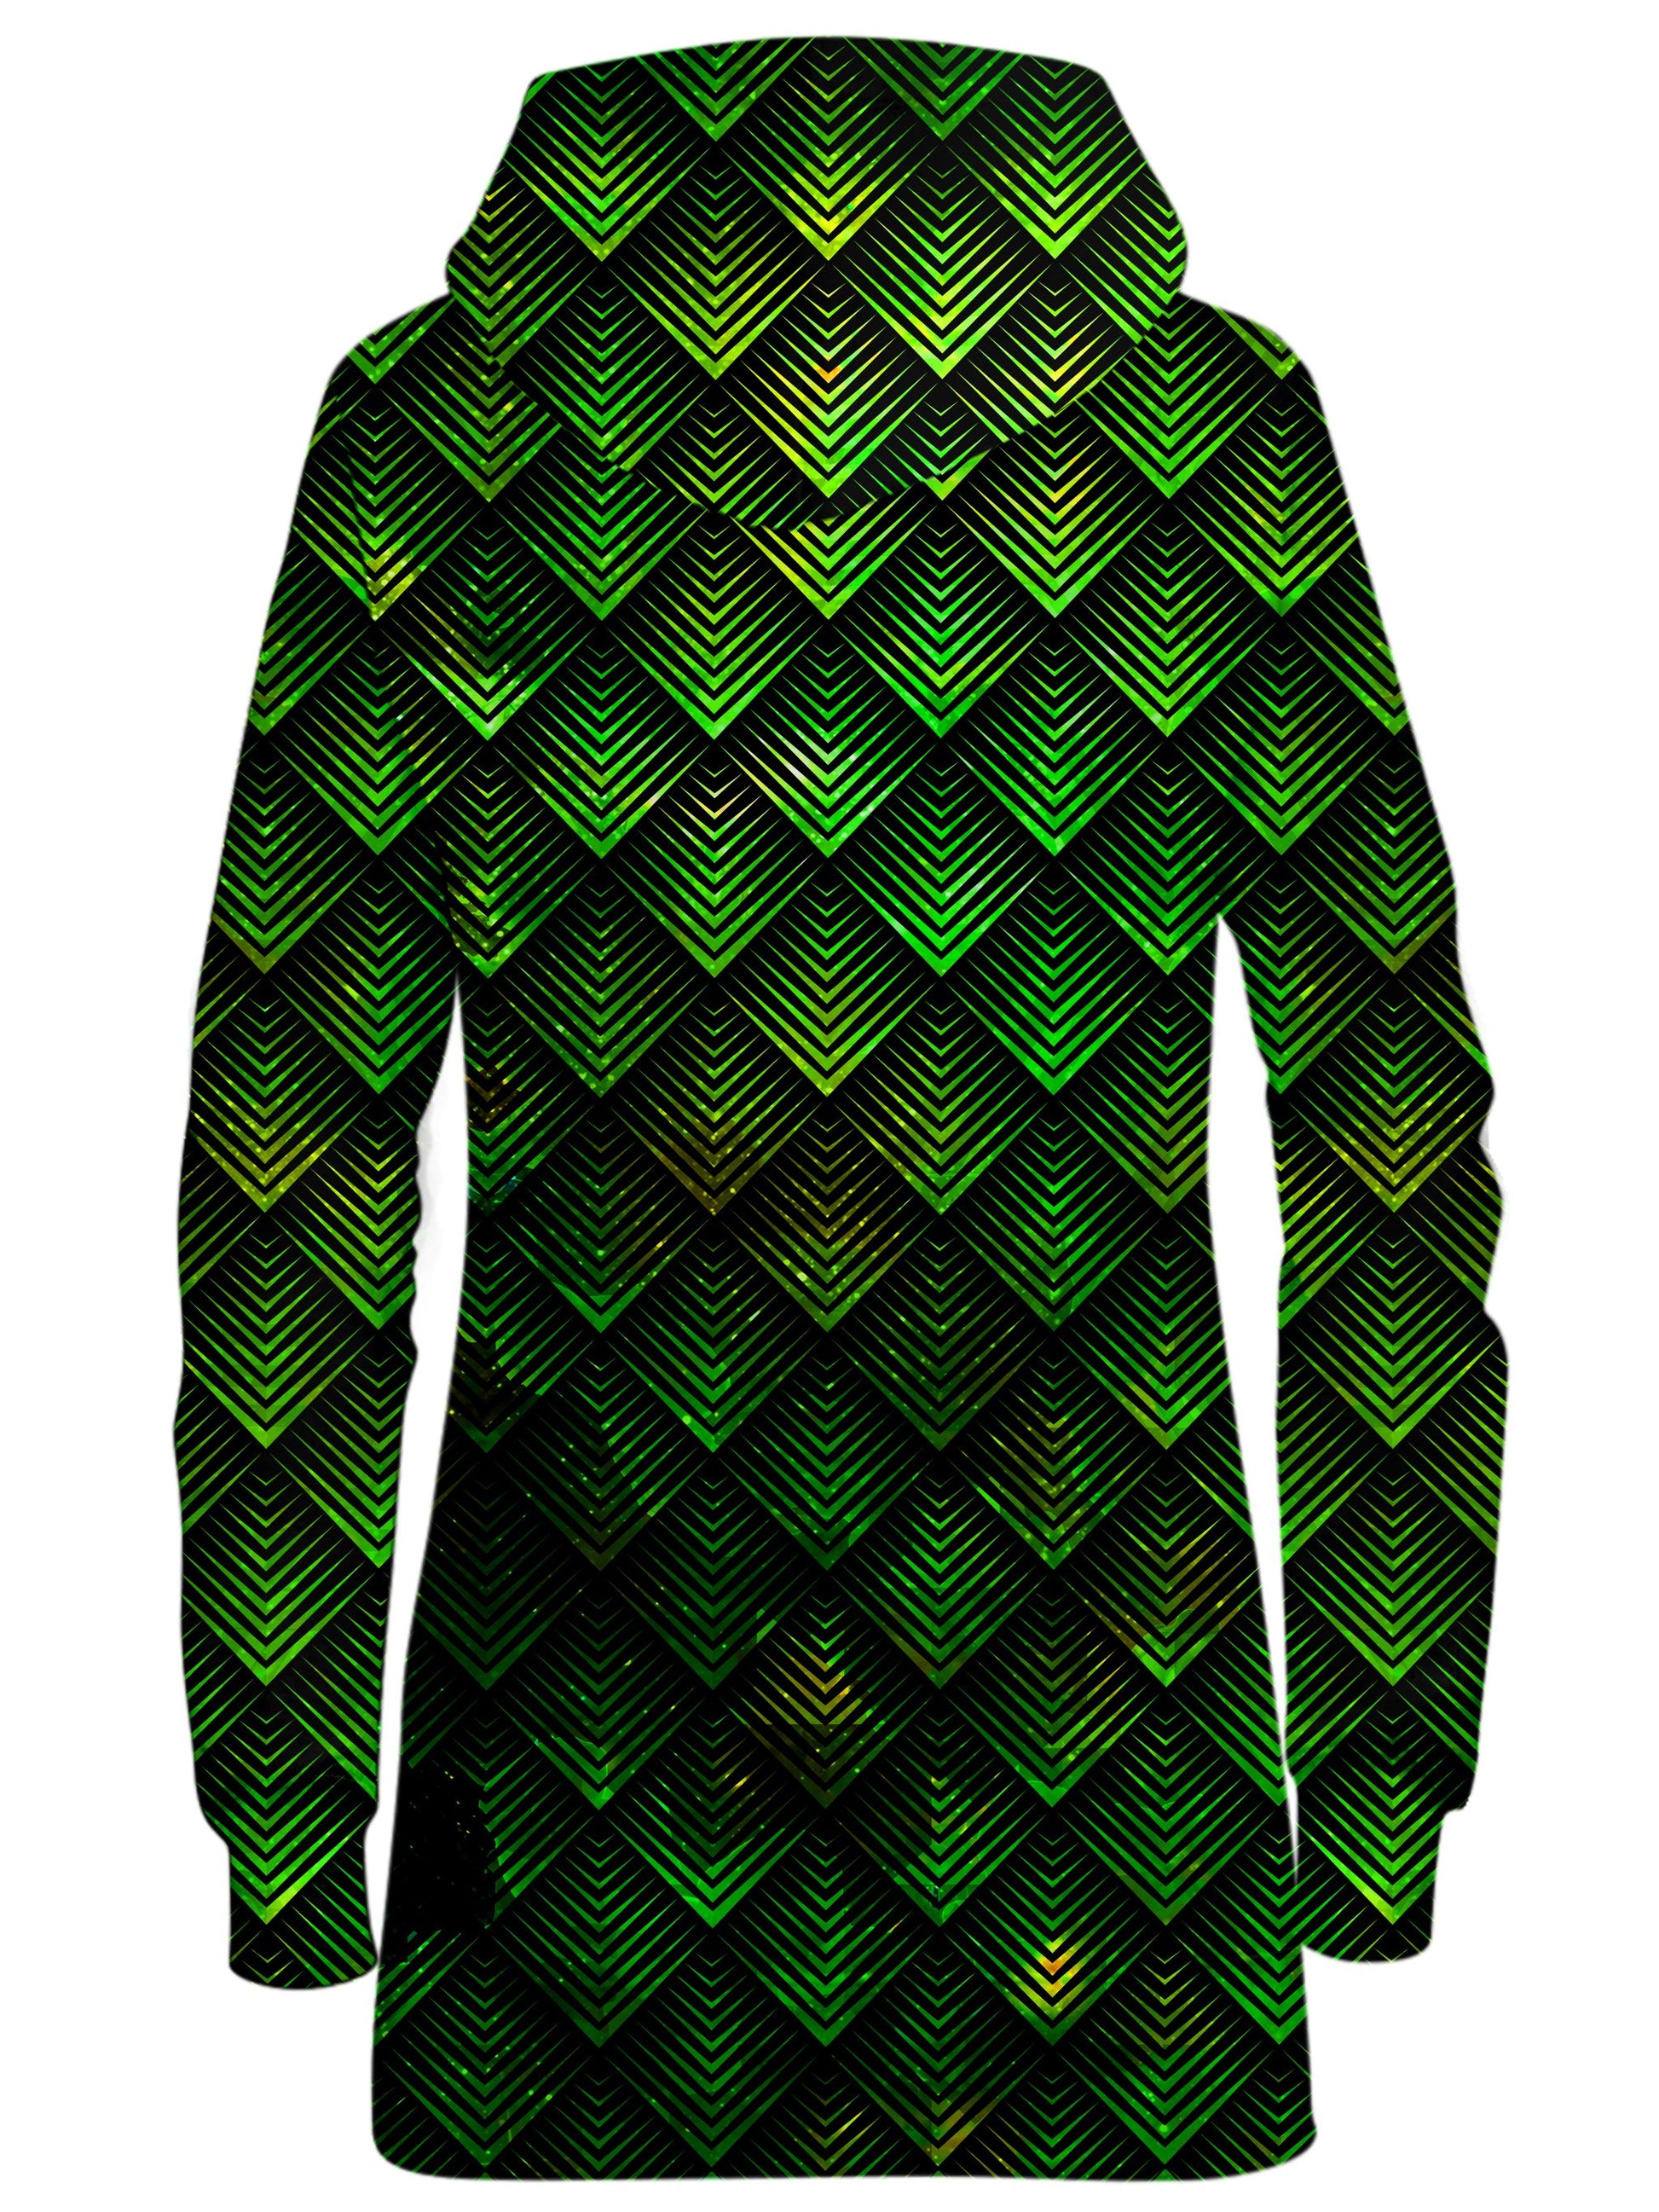 Noctum X Truth Galactic Dragon Scale Green Hoodie Dress - iEDM